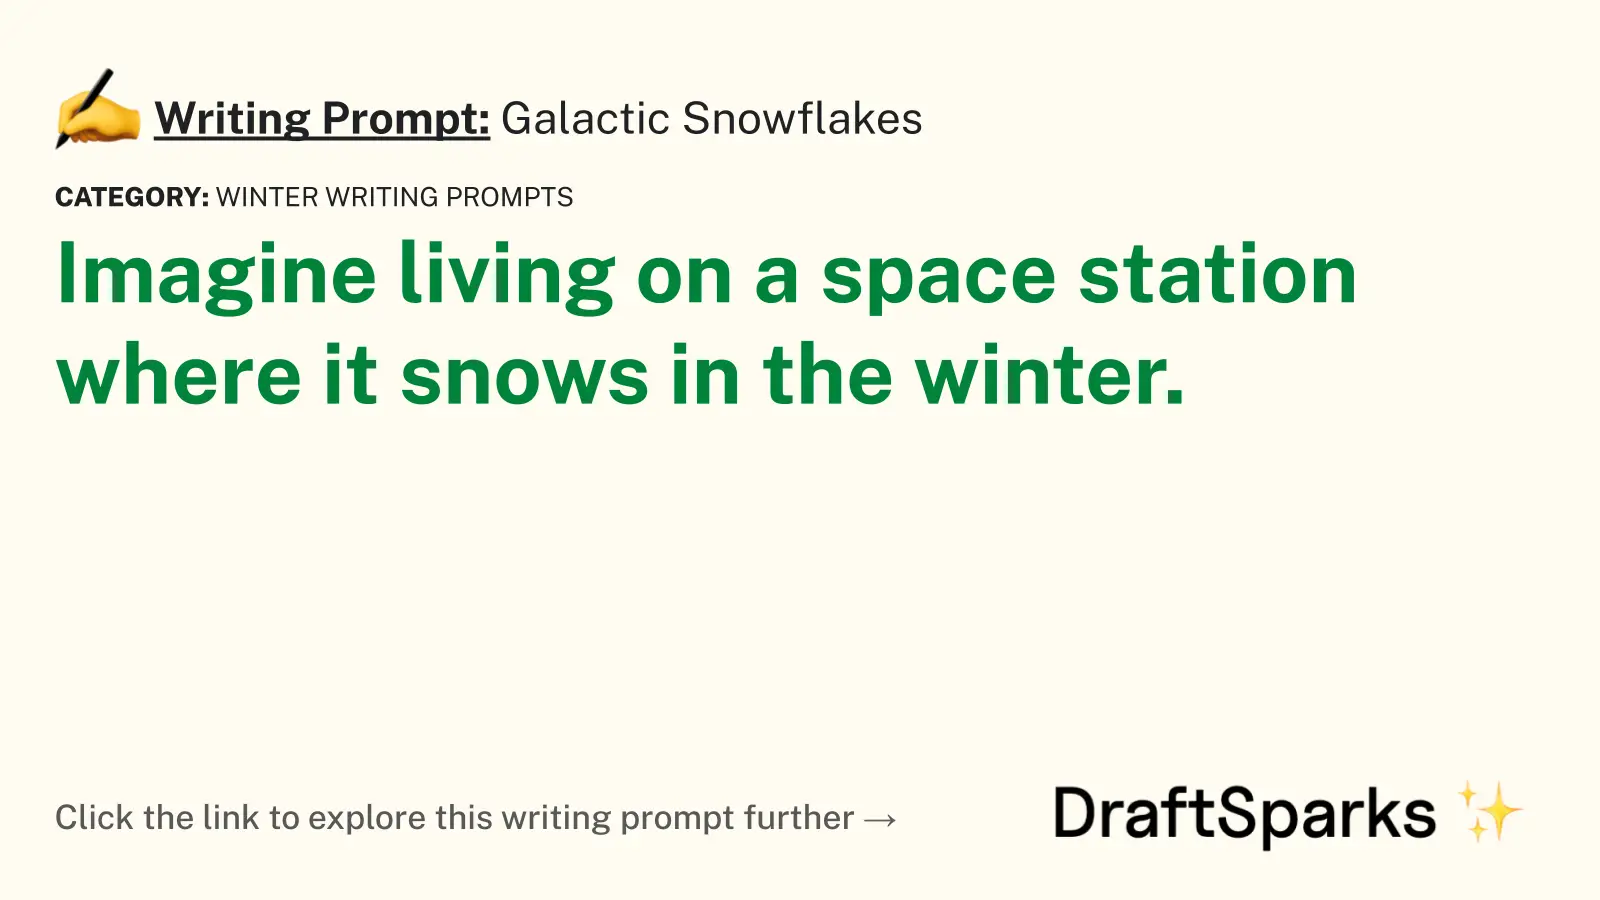 Galactic Snowflakes